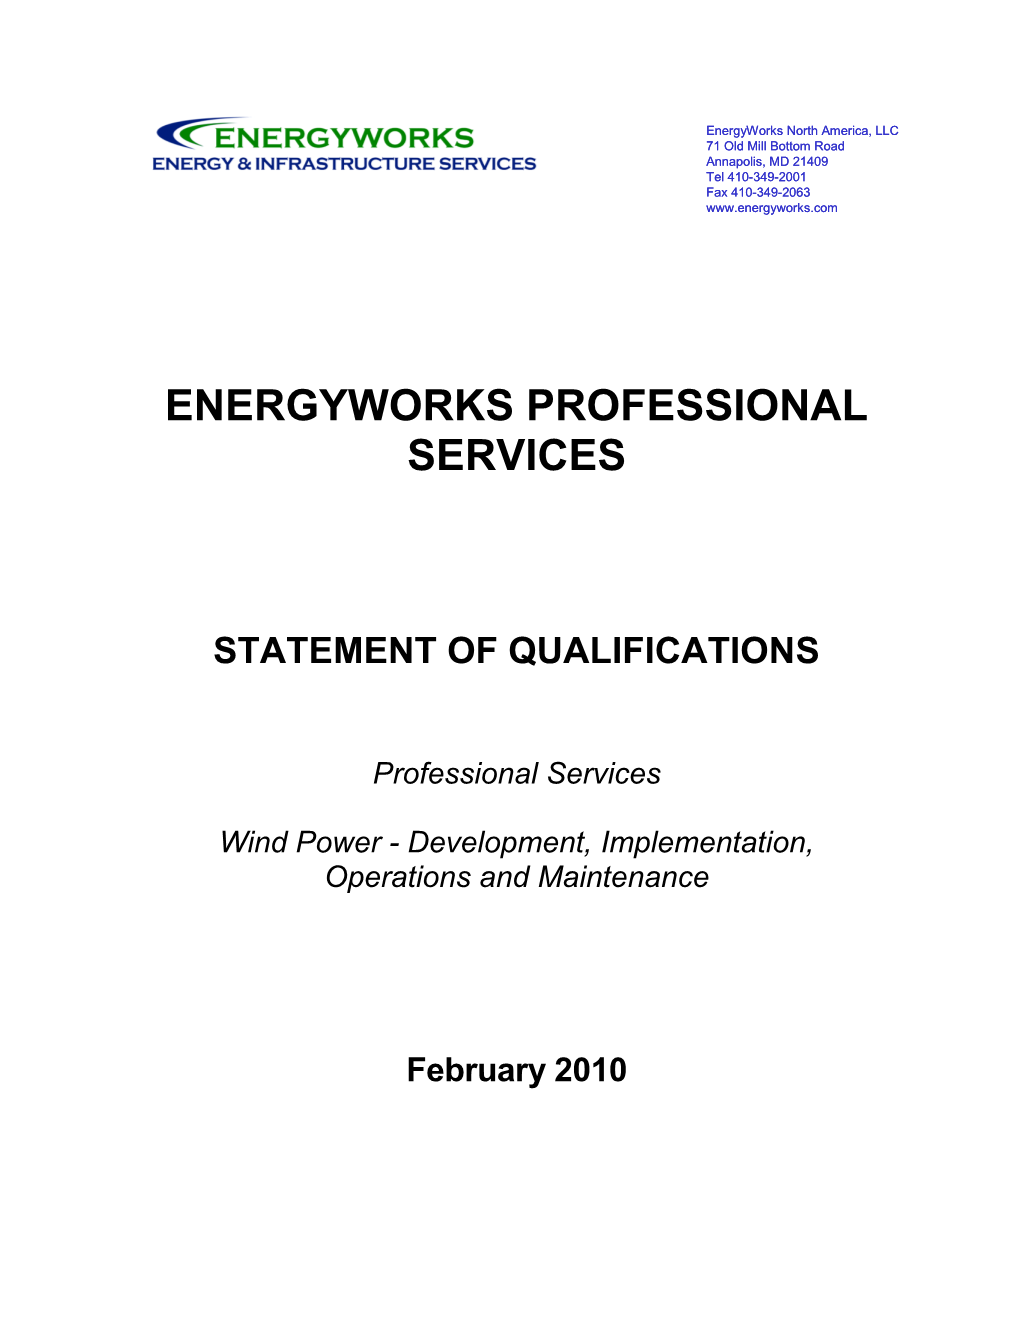 Energyworks Professional Services